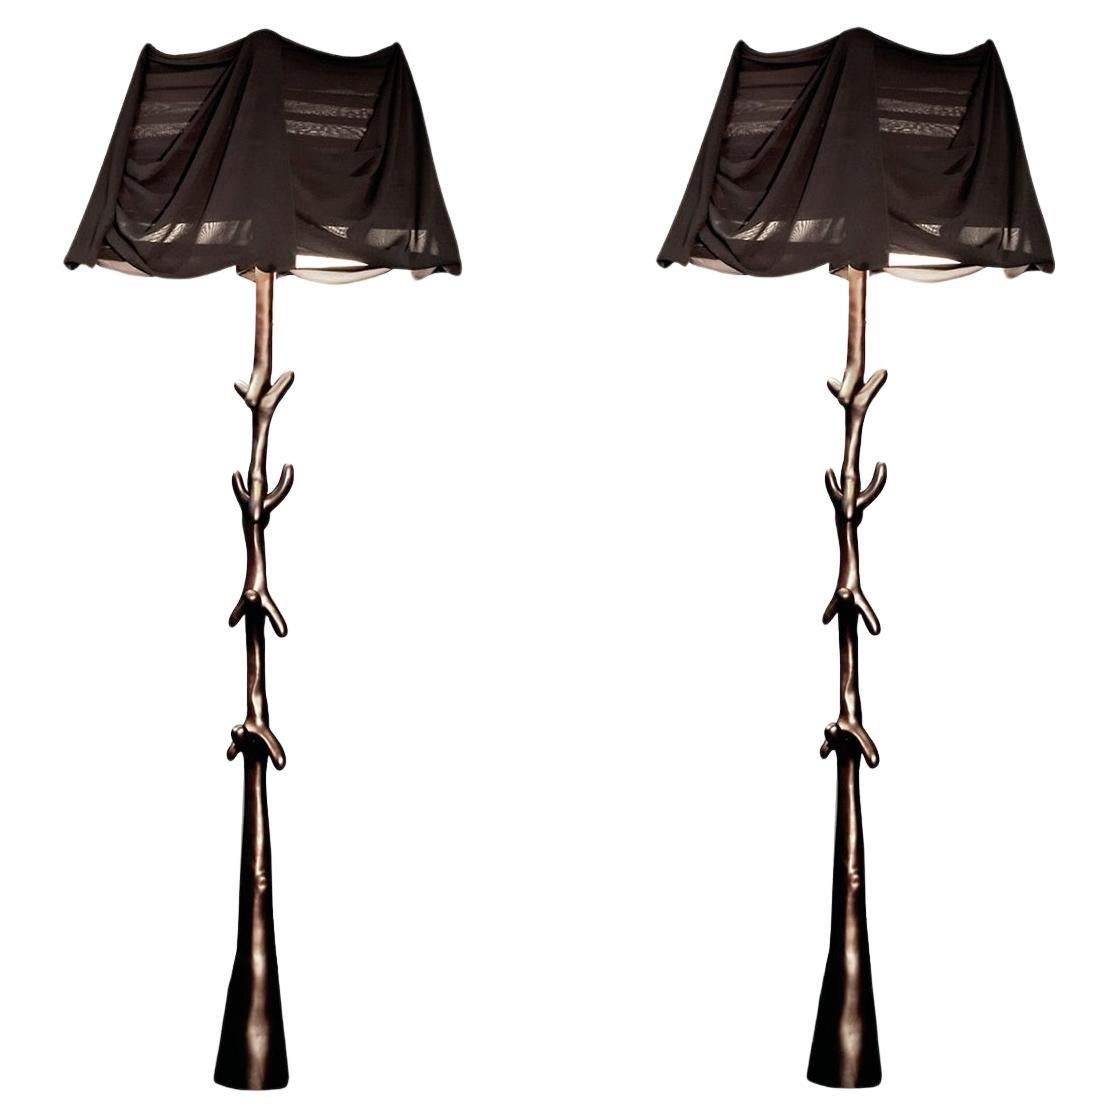 New And Custom Floor Lamps